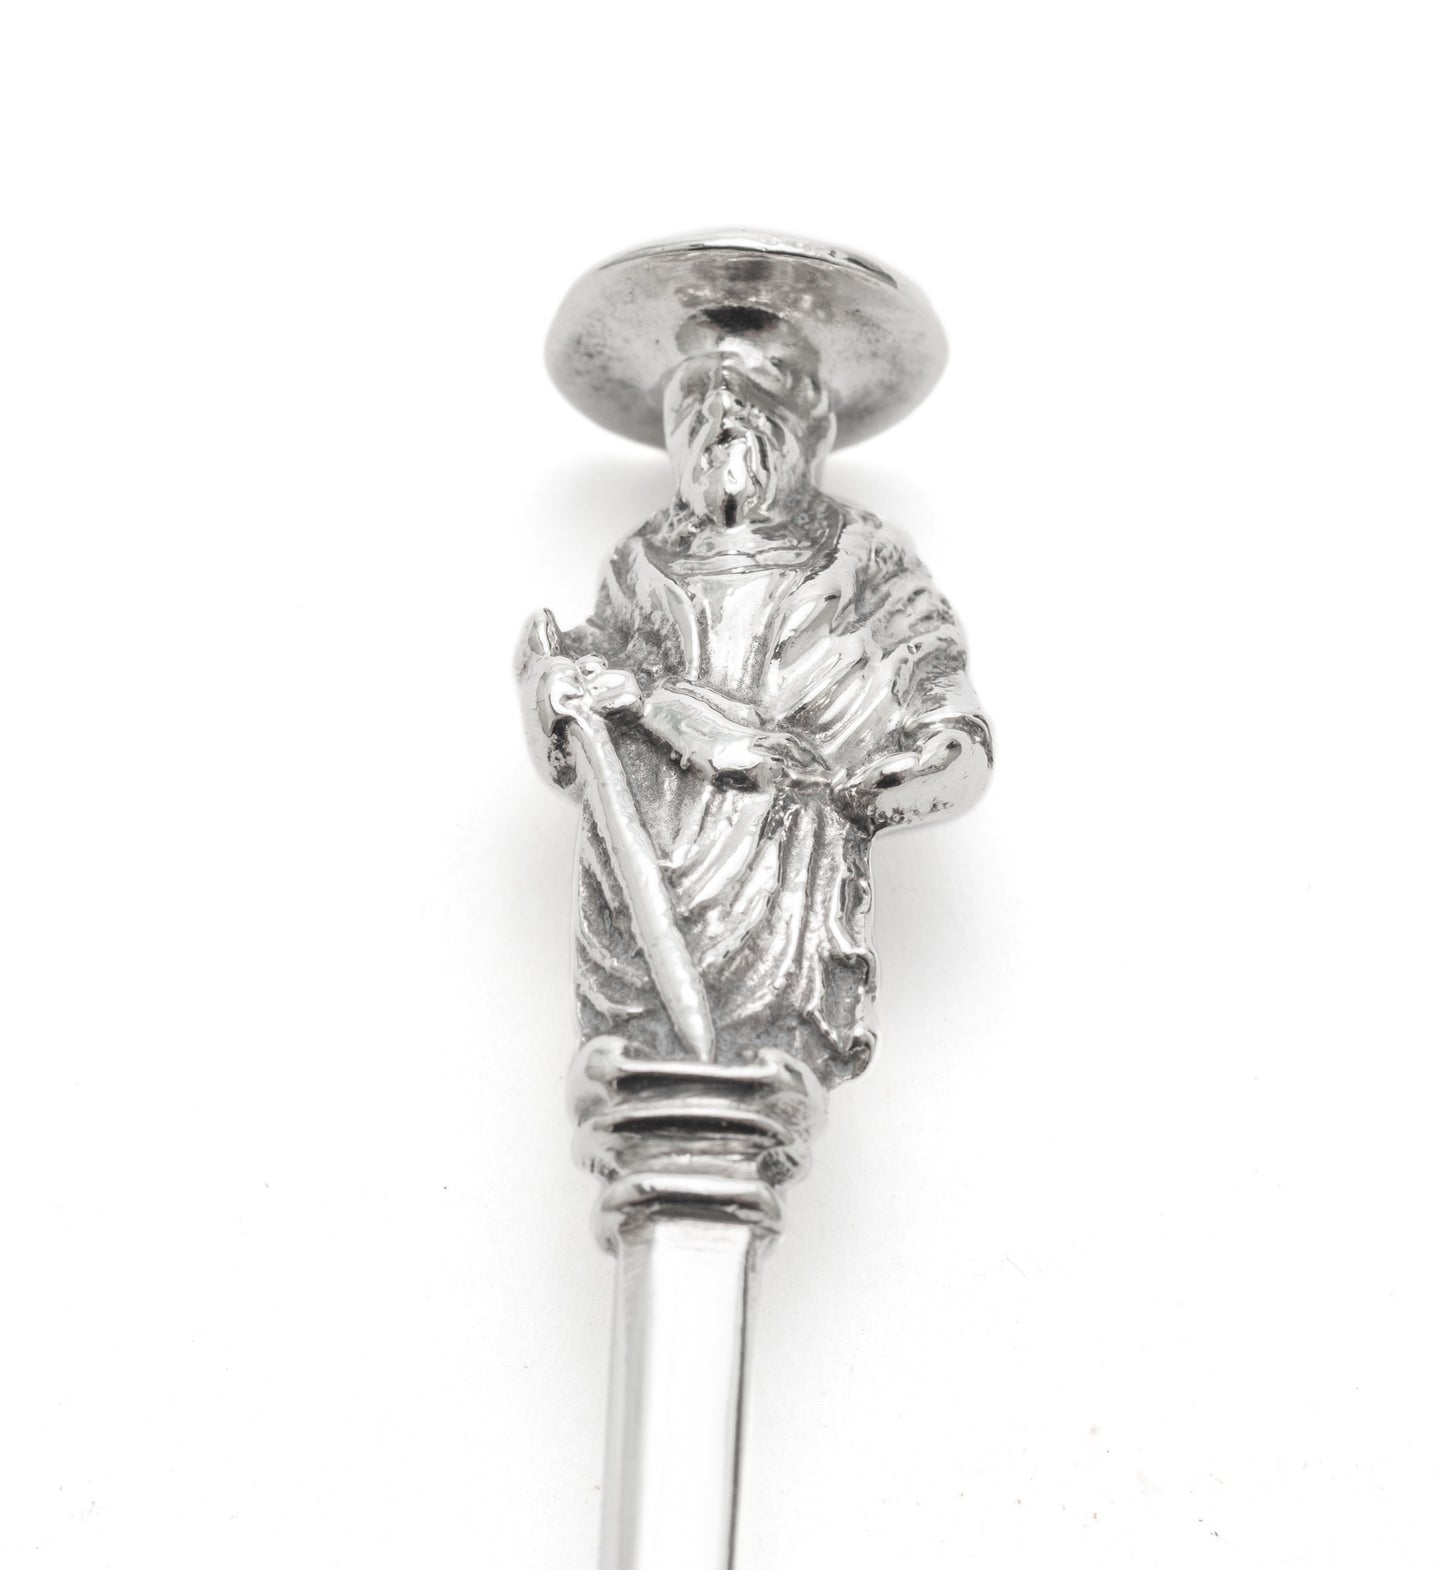 Georgian George III Antique English Sterling Silver Apostle Spoon c1770 (Code 2182)